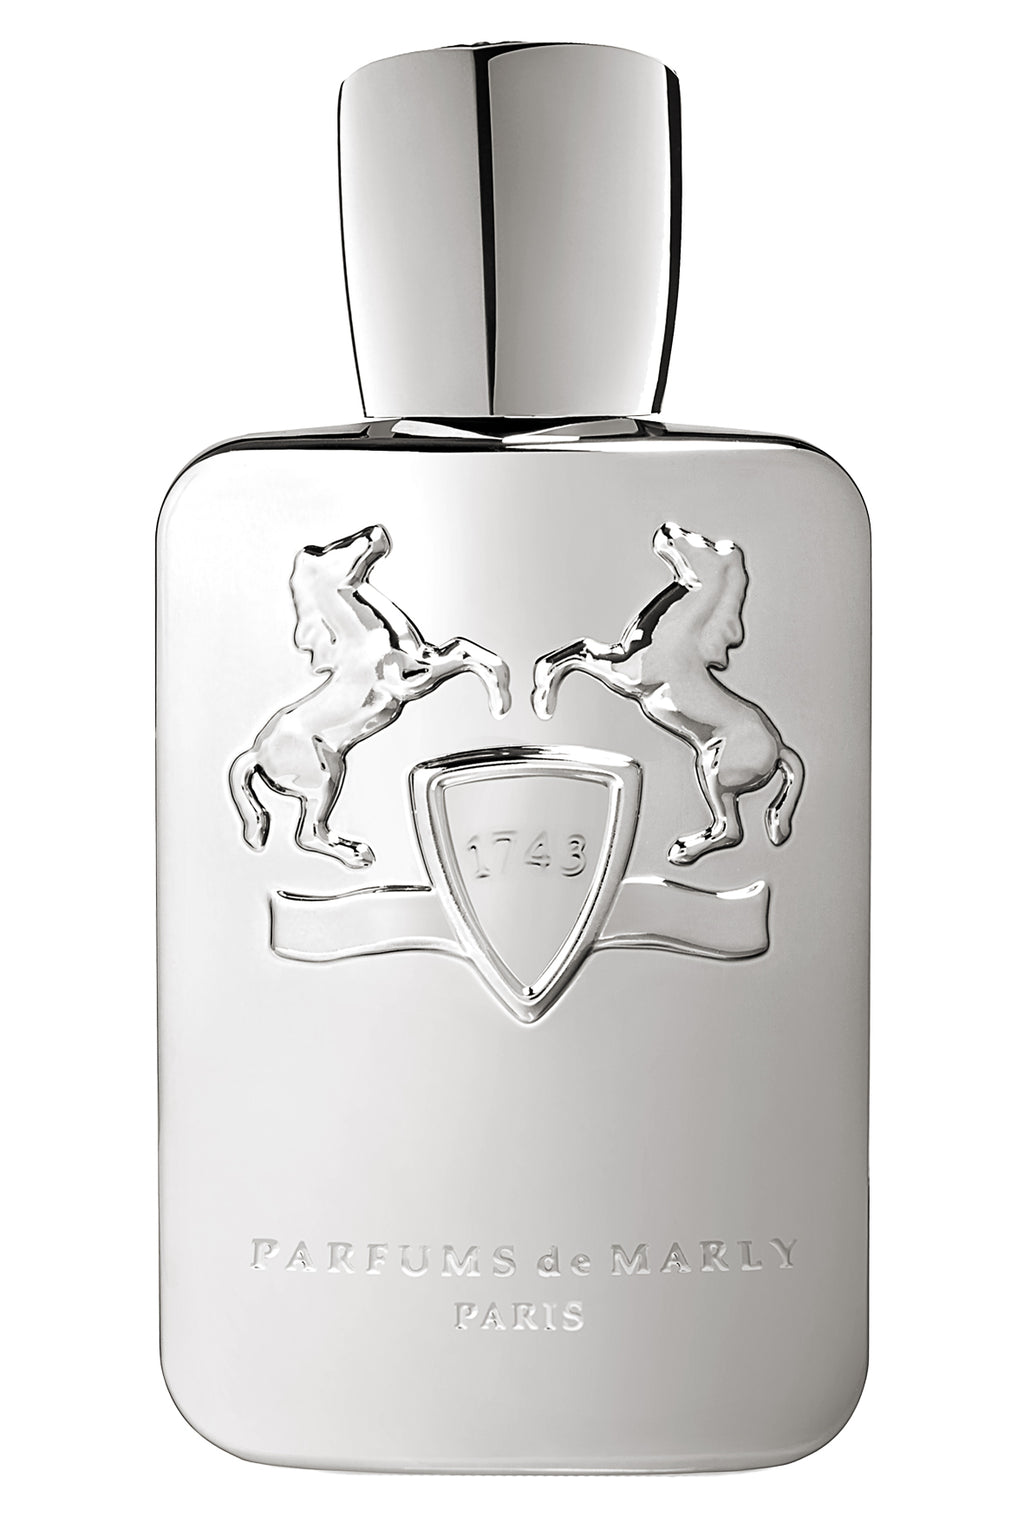 Parfums de Marly – Pegasus - Danae Profumeria